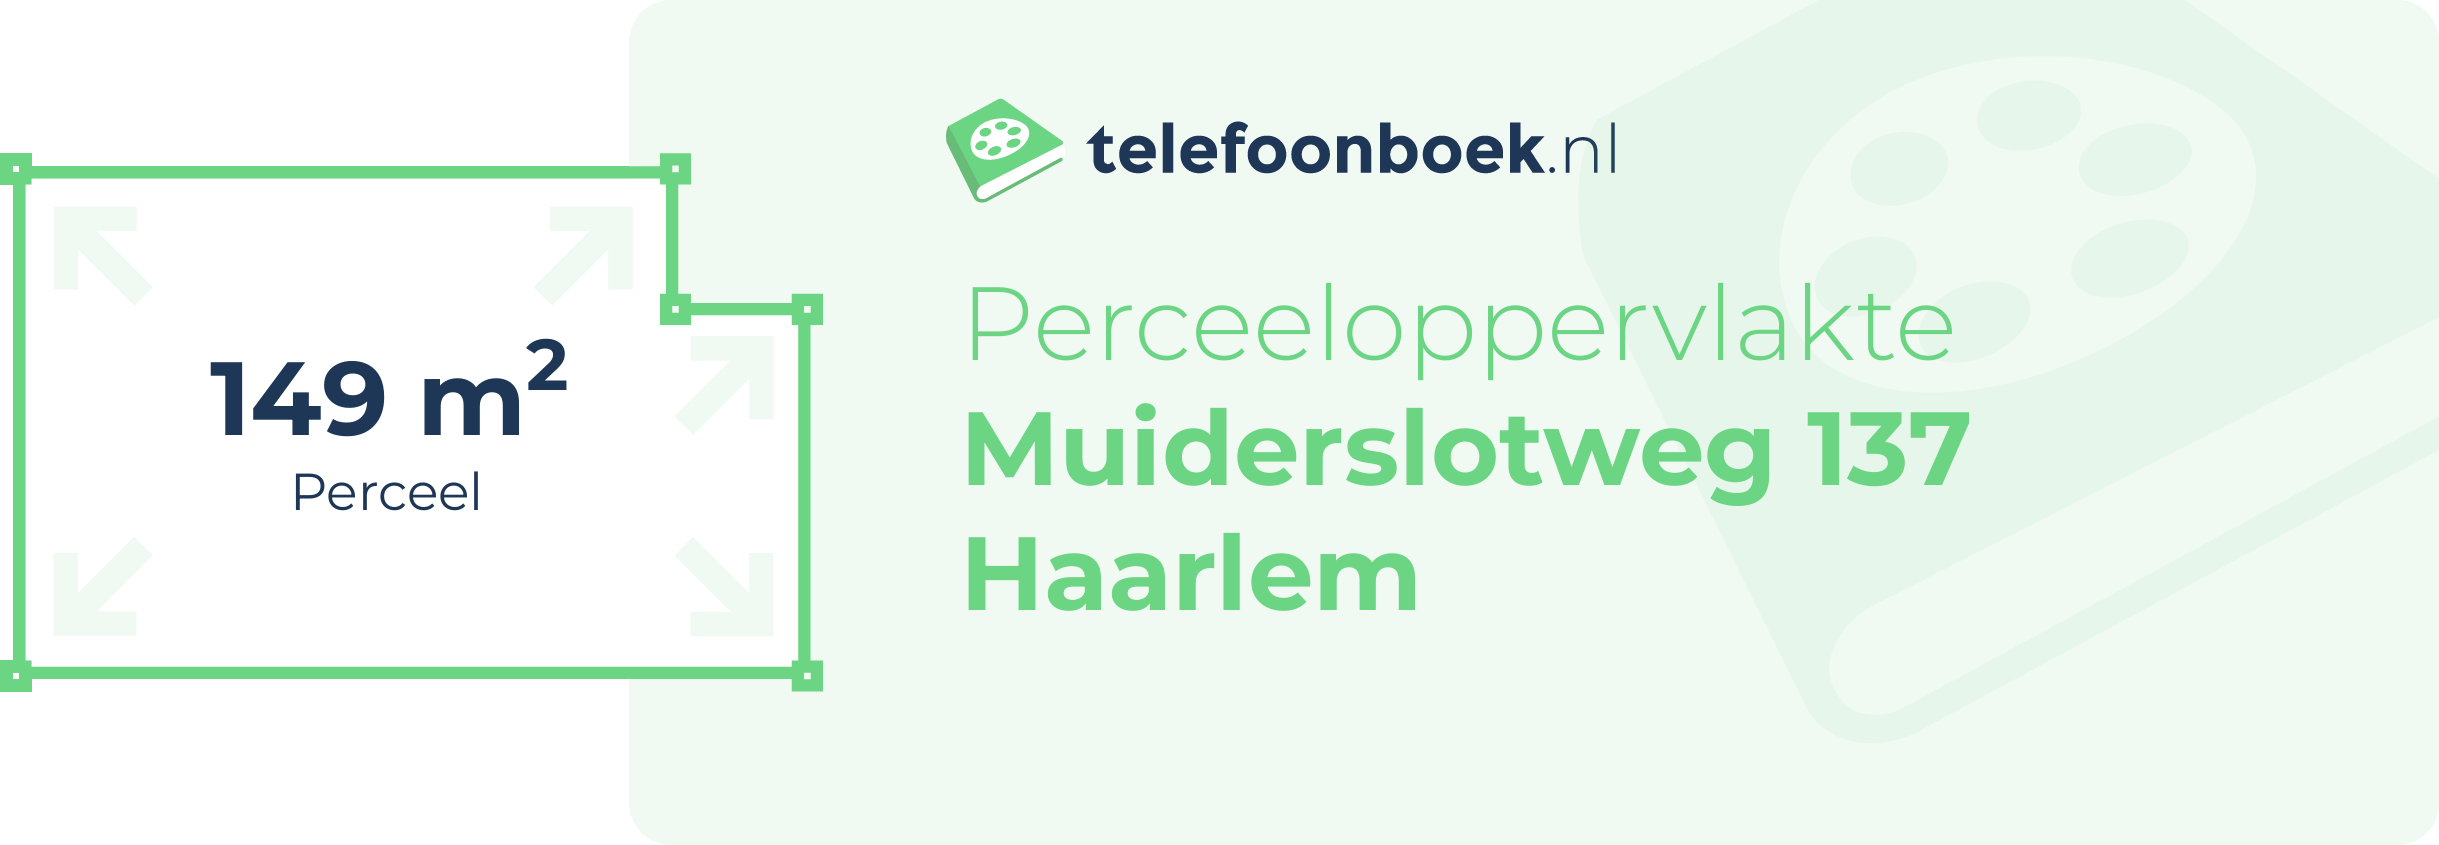 Perceeloppervlakte Muiderslotweg 137 Haarlem